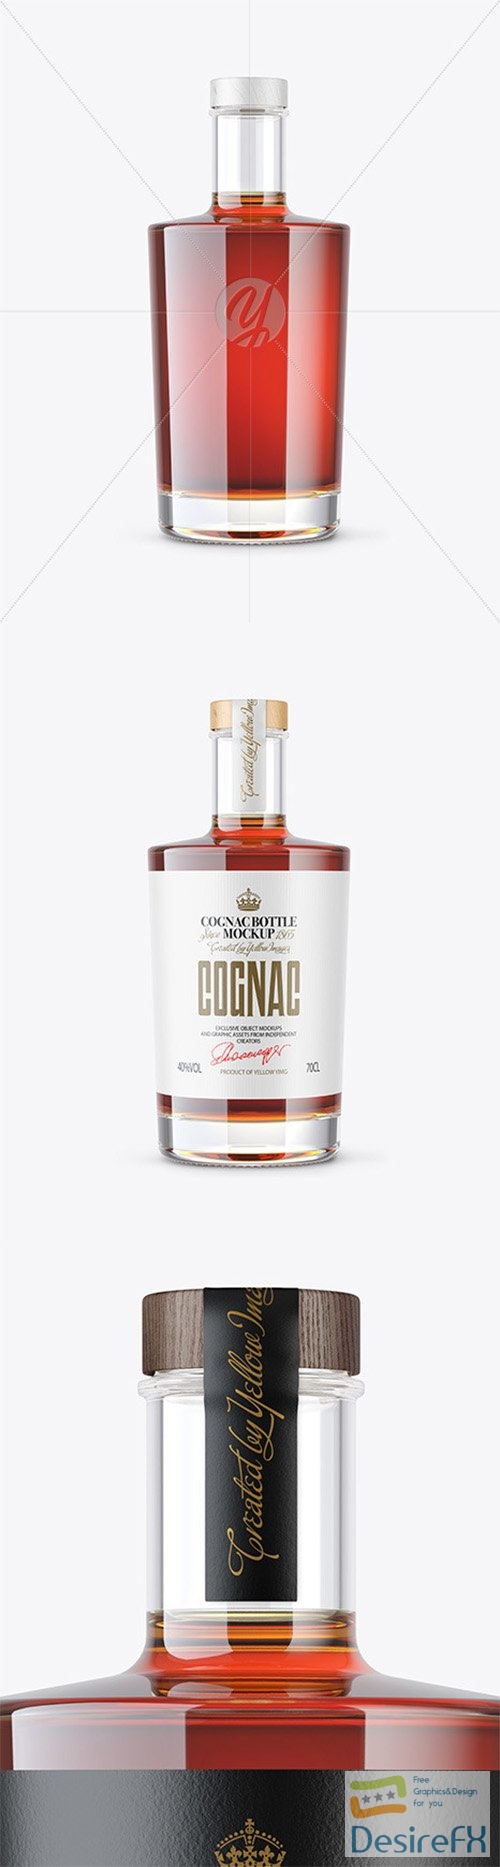 Clear Glass Cognac Bottle Mockup 80606 TIF